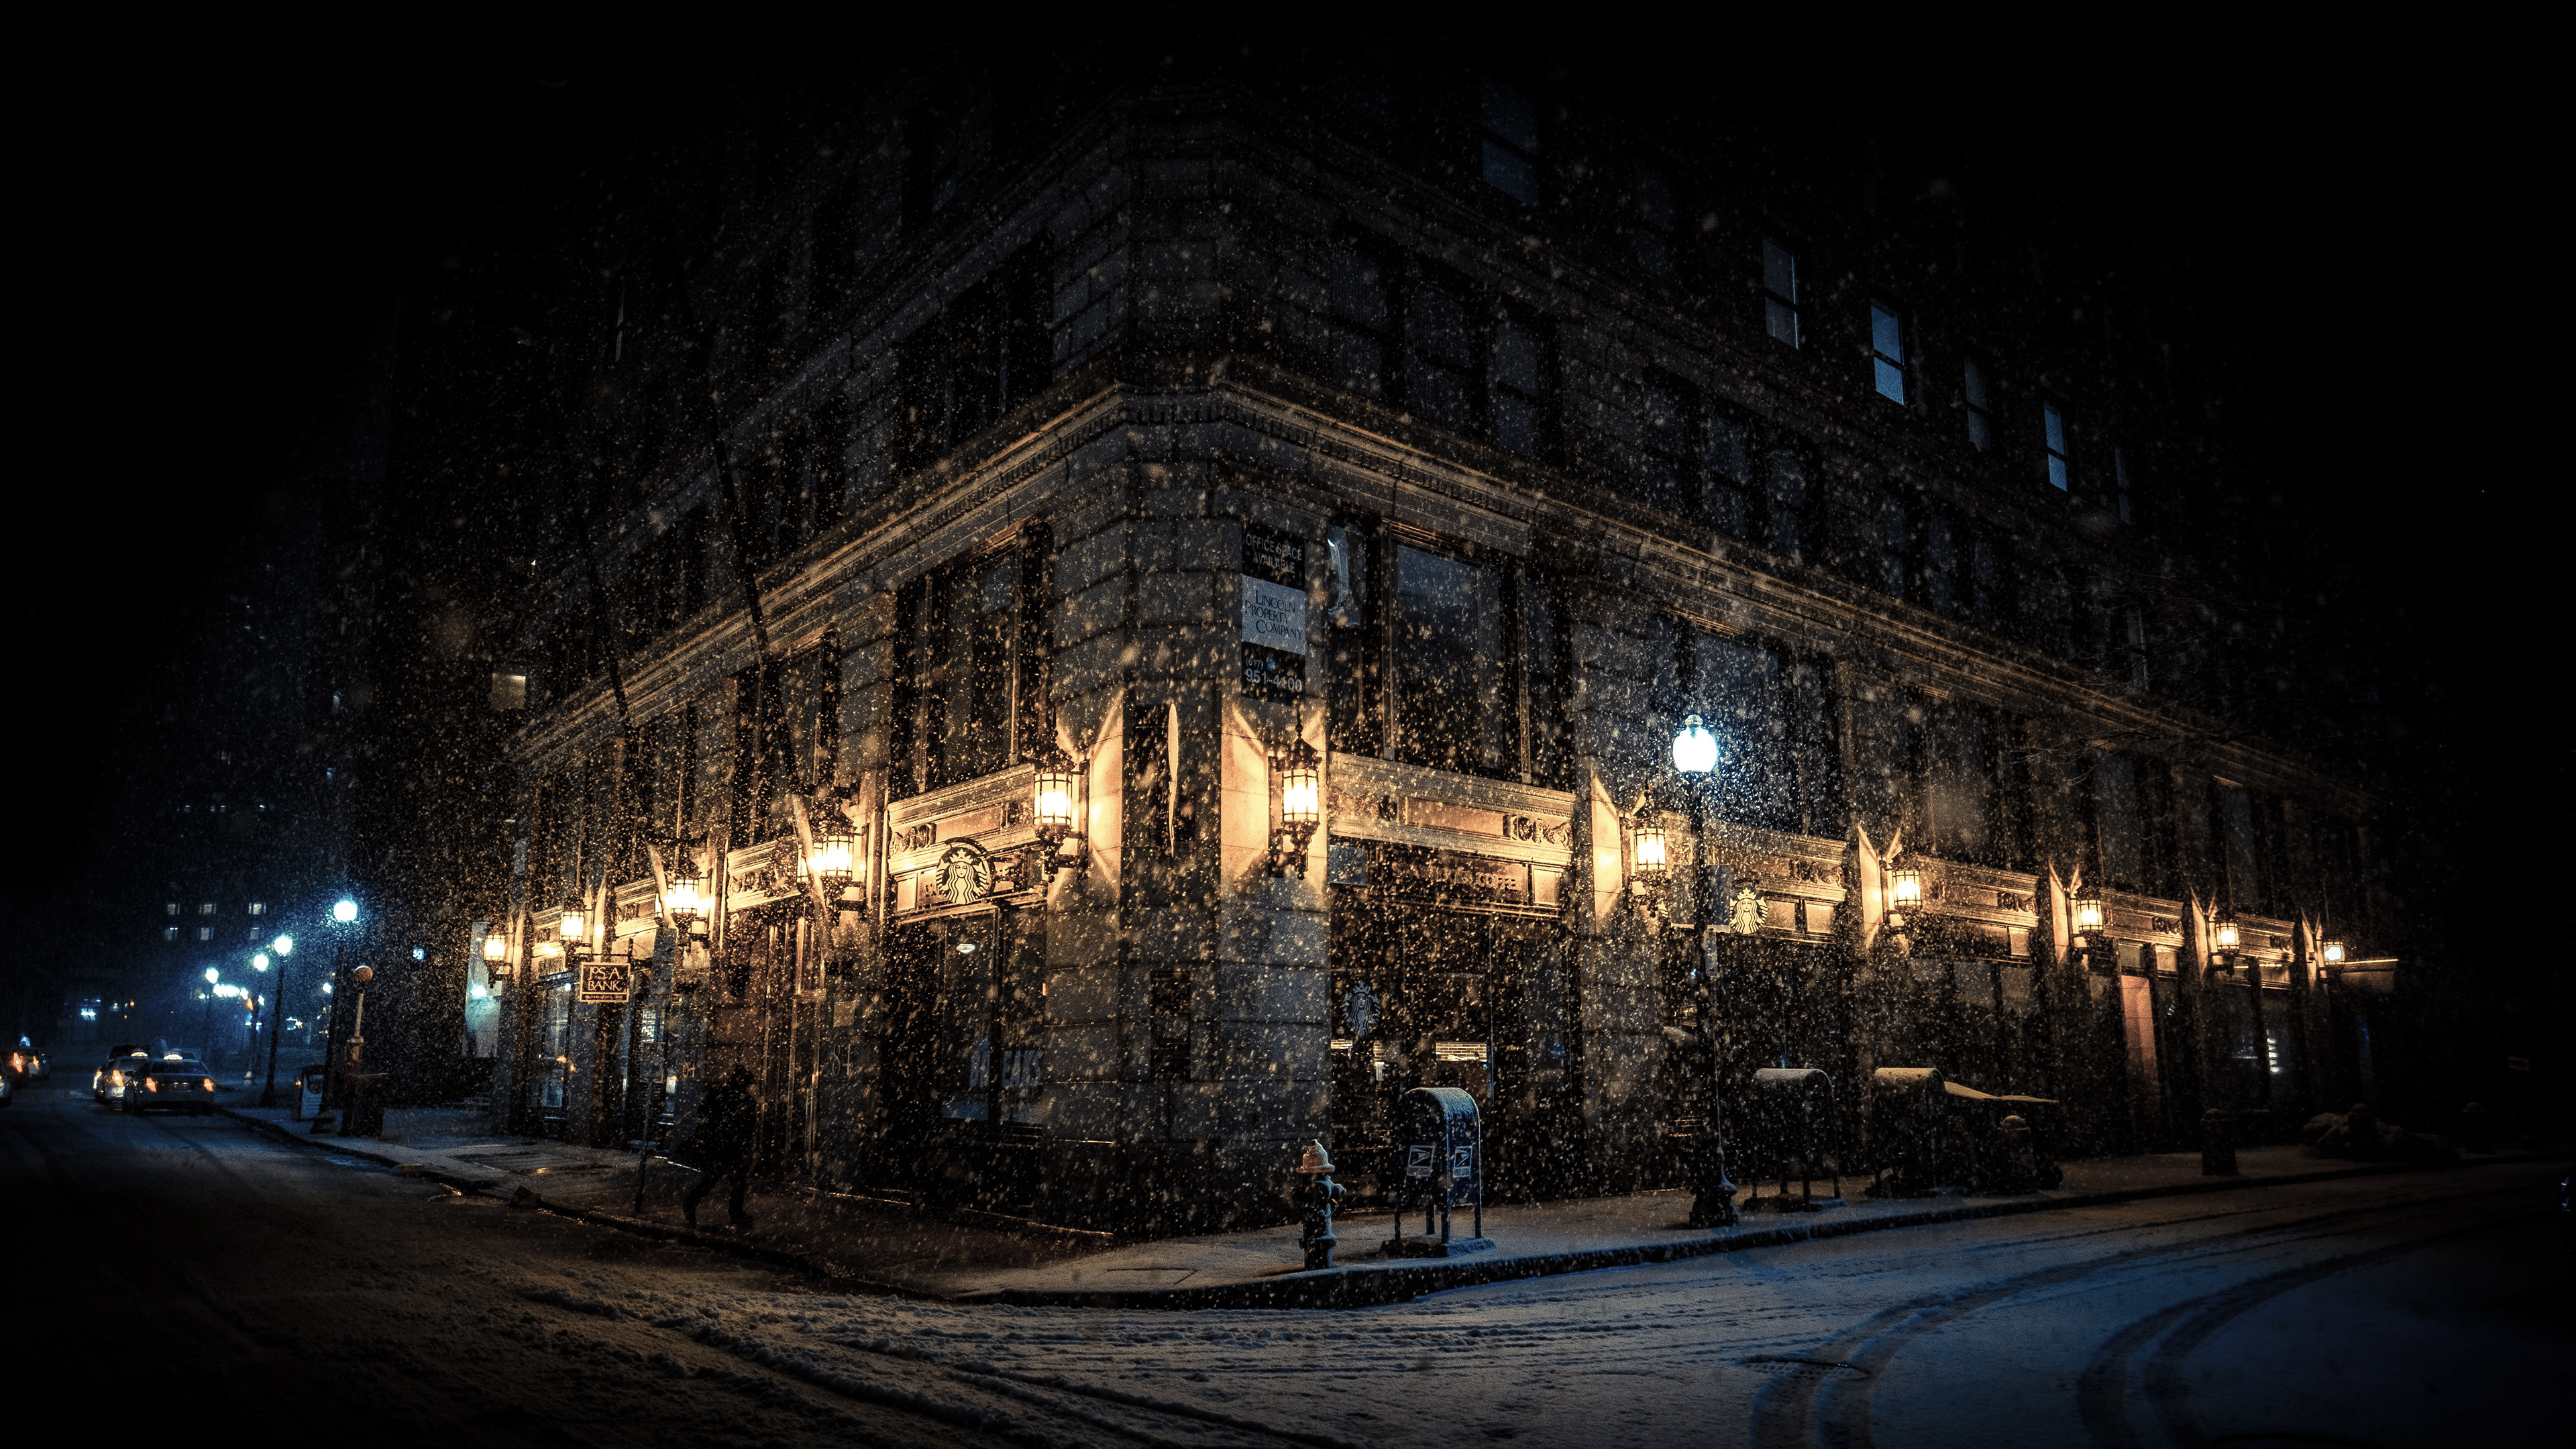 Osman Rana Snowing Sidewalks Building Lights Street 3840x2160